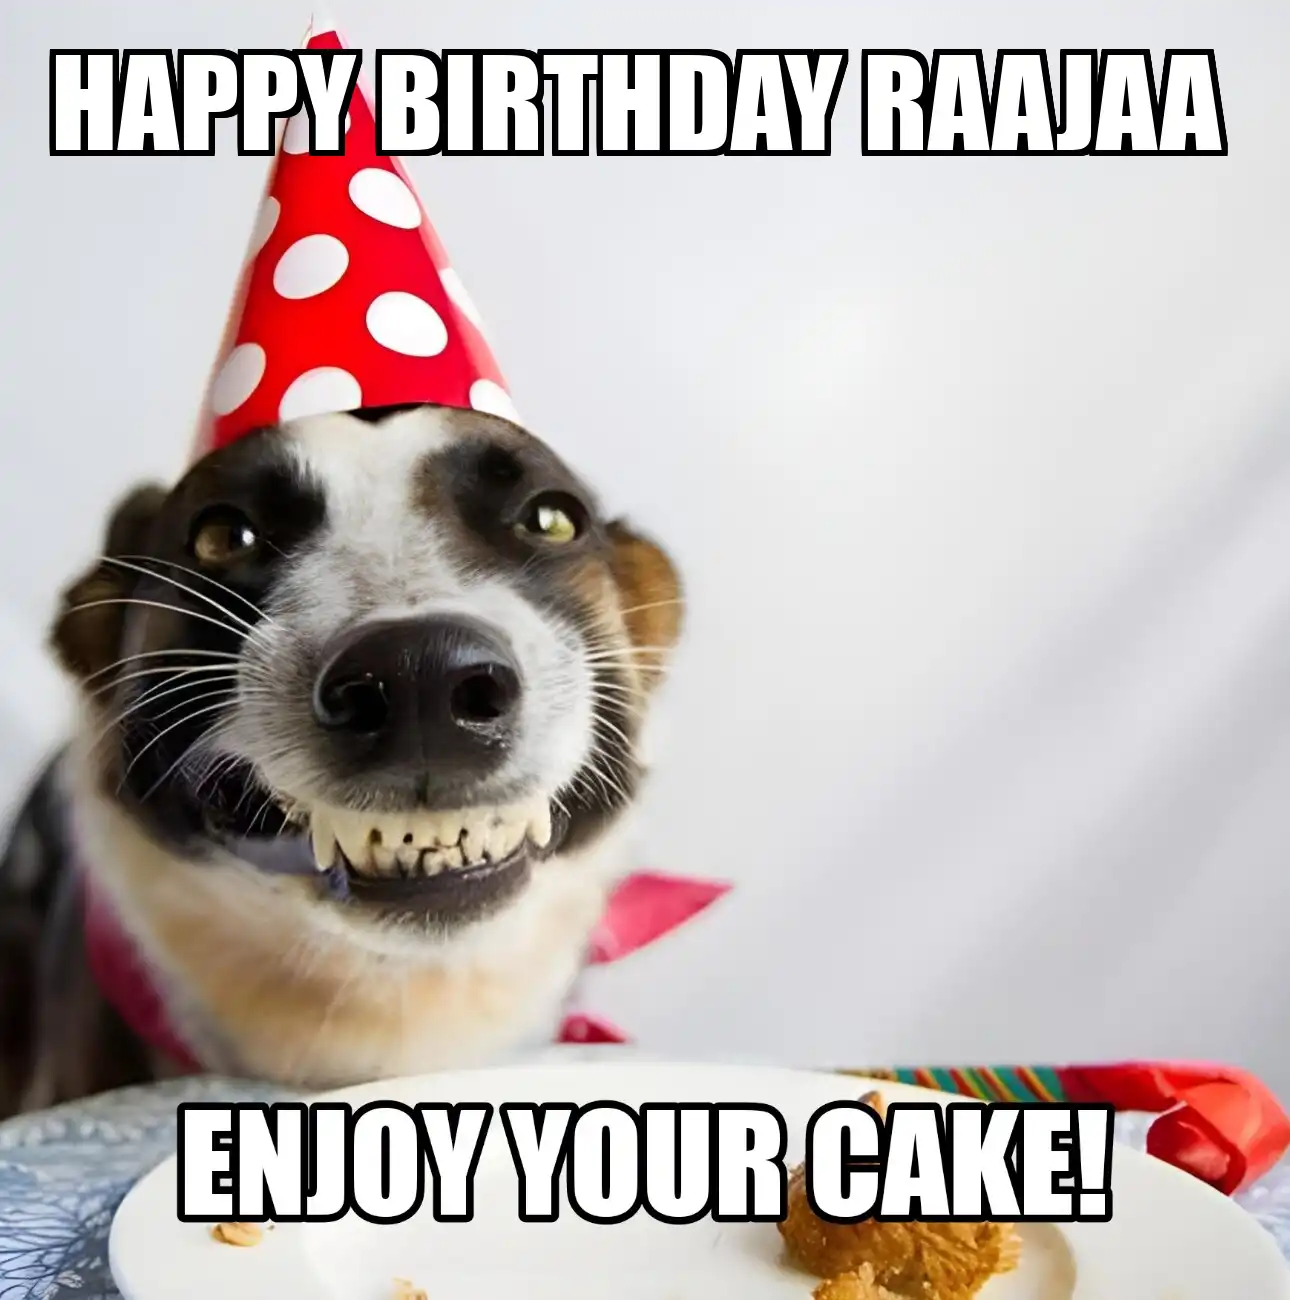 Happy Birthday Raajaa Enjoy Your Cake Dog Meme